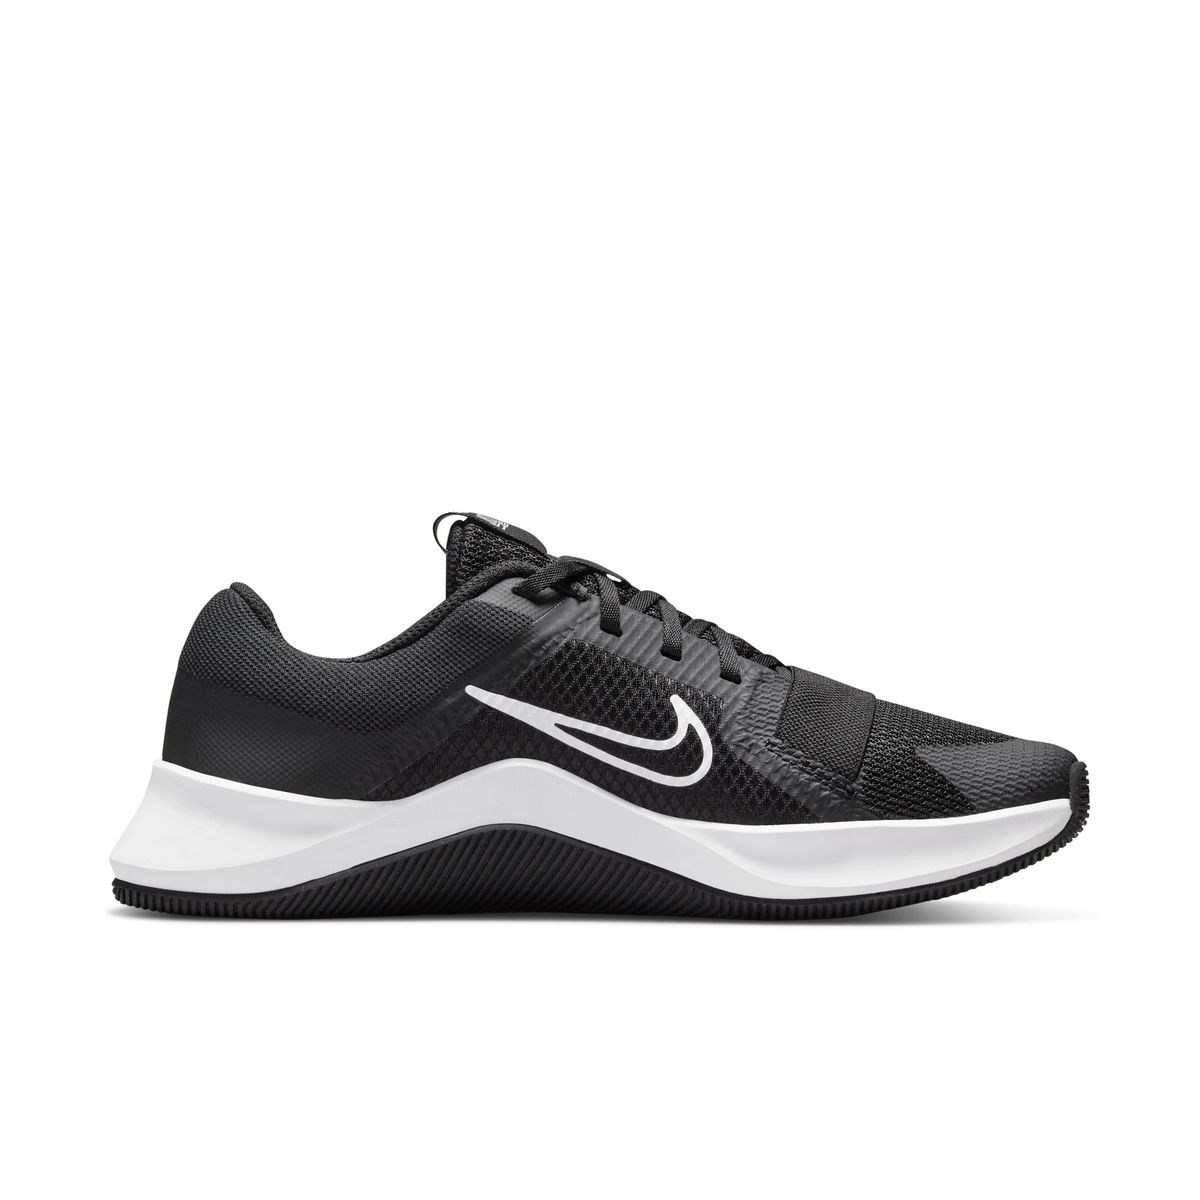 Nike Women's MC Trainer 2 Training Shoes - Black/White/Iron Grey | Shop ...